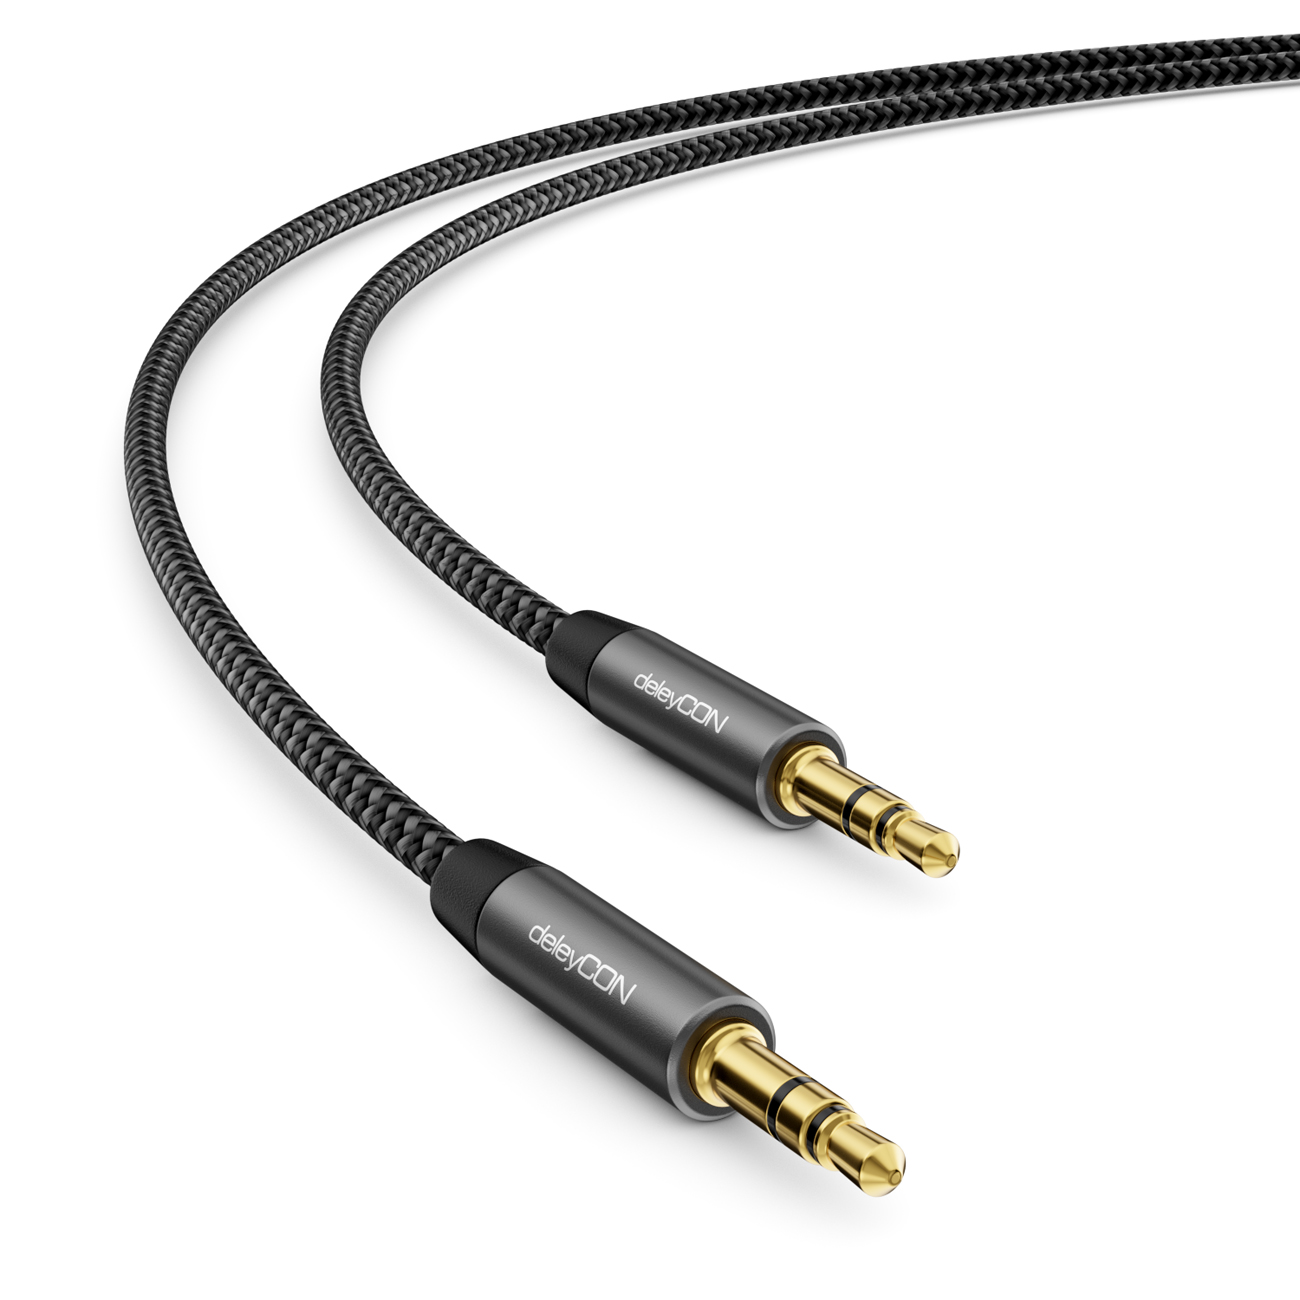 deleyCON 3,5mm Klinke Splitter Audio Stereo AUX Adapter Kabel